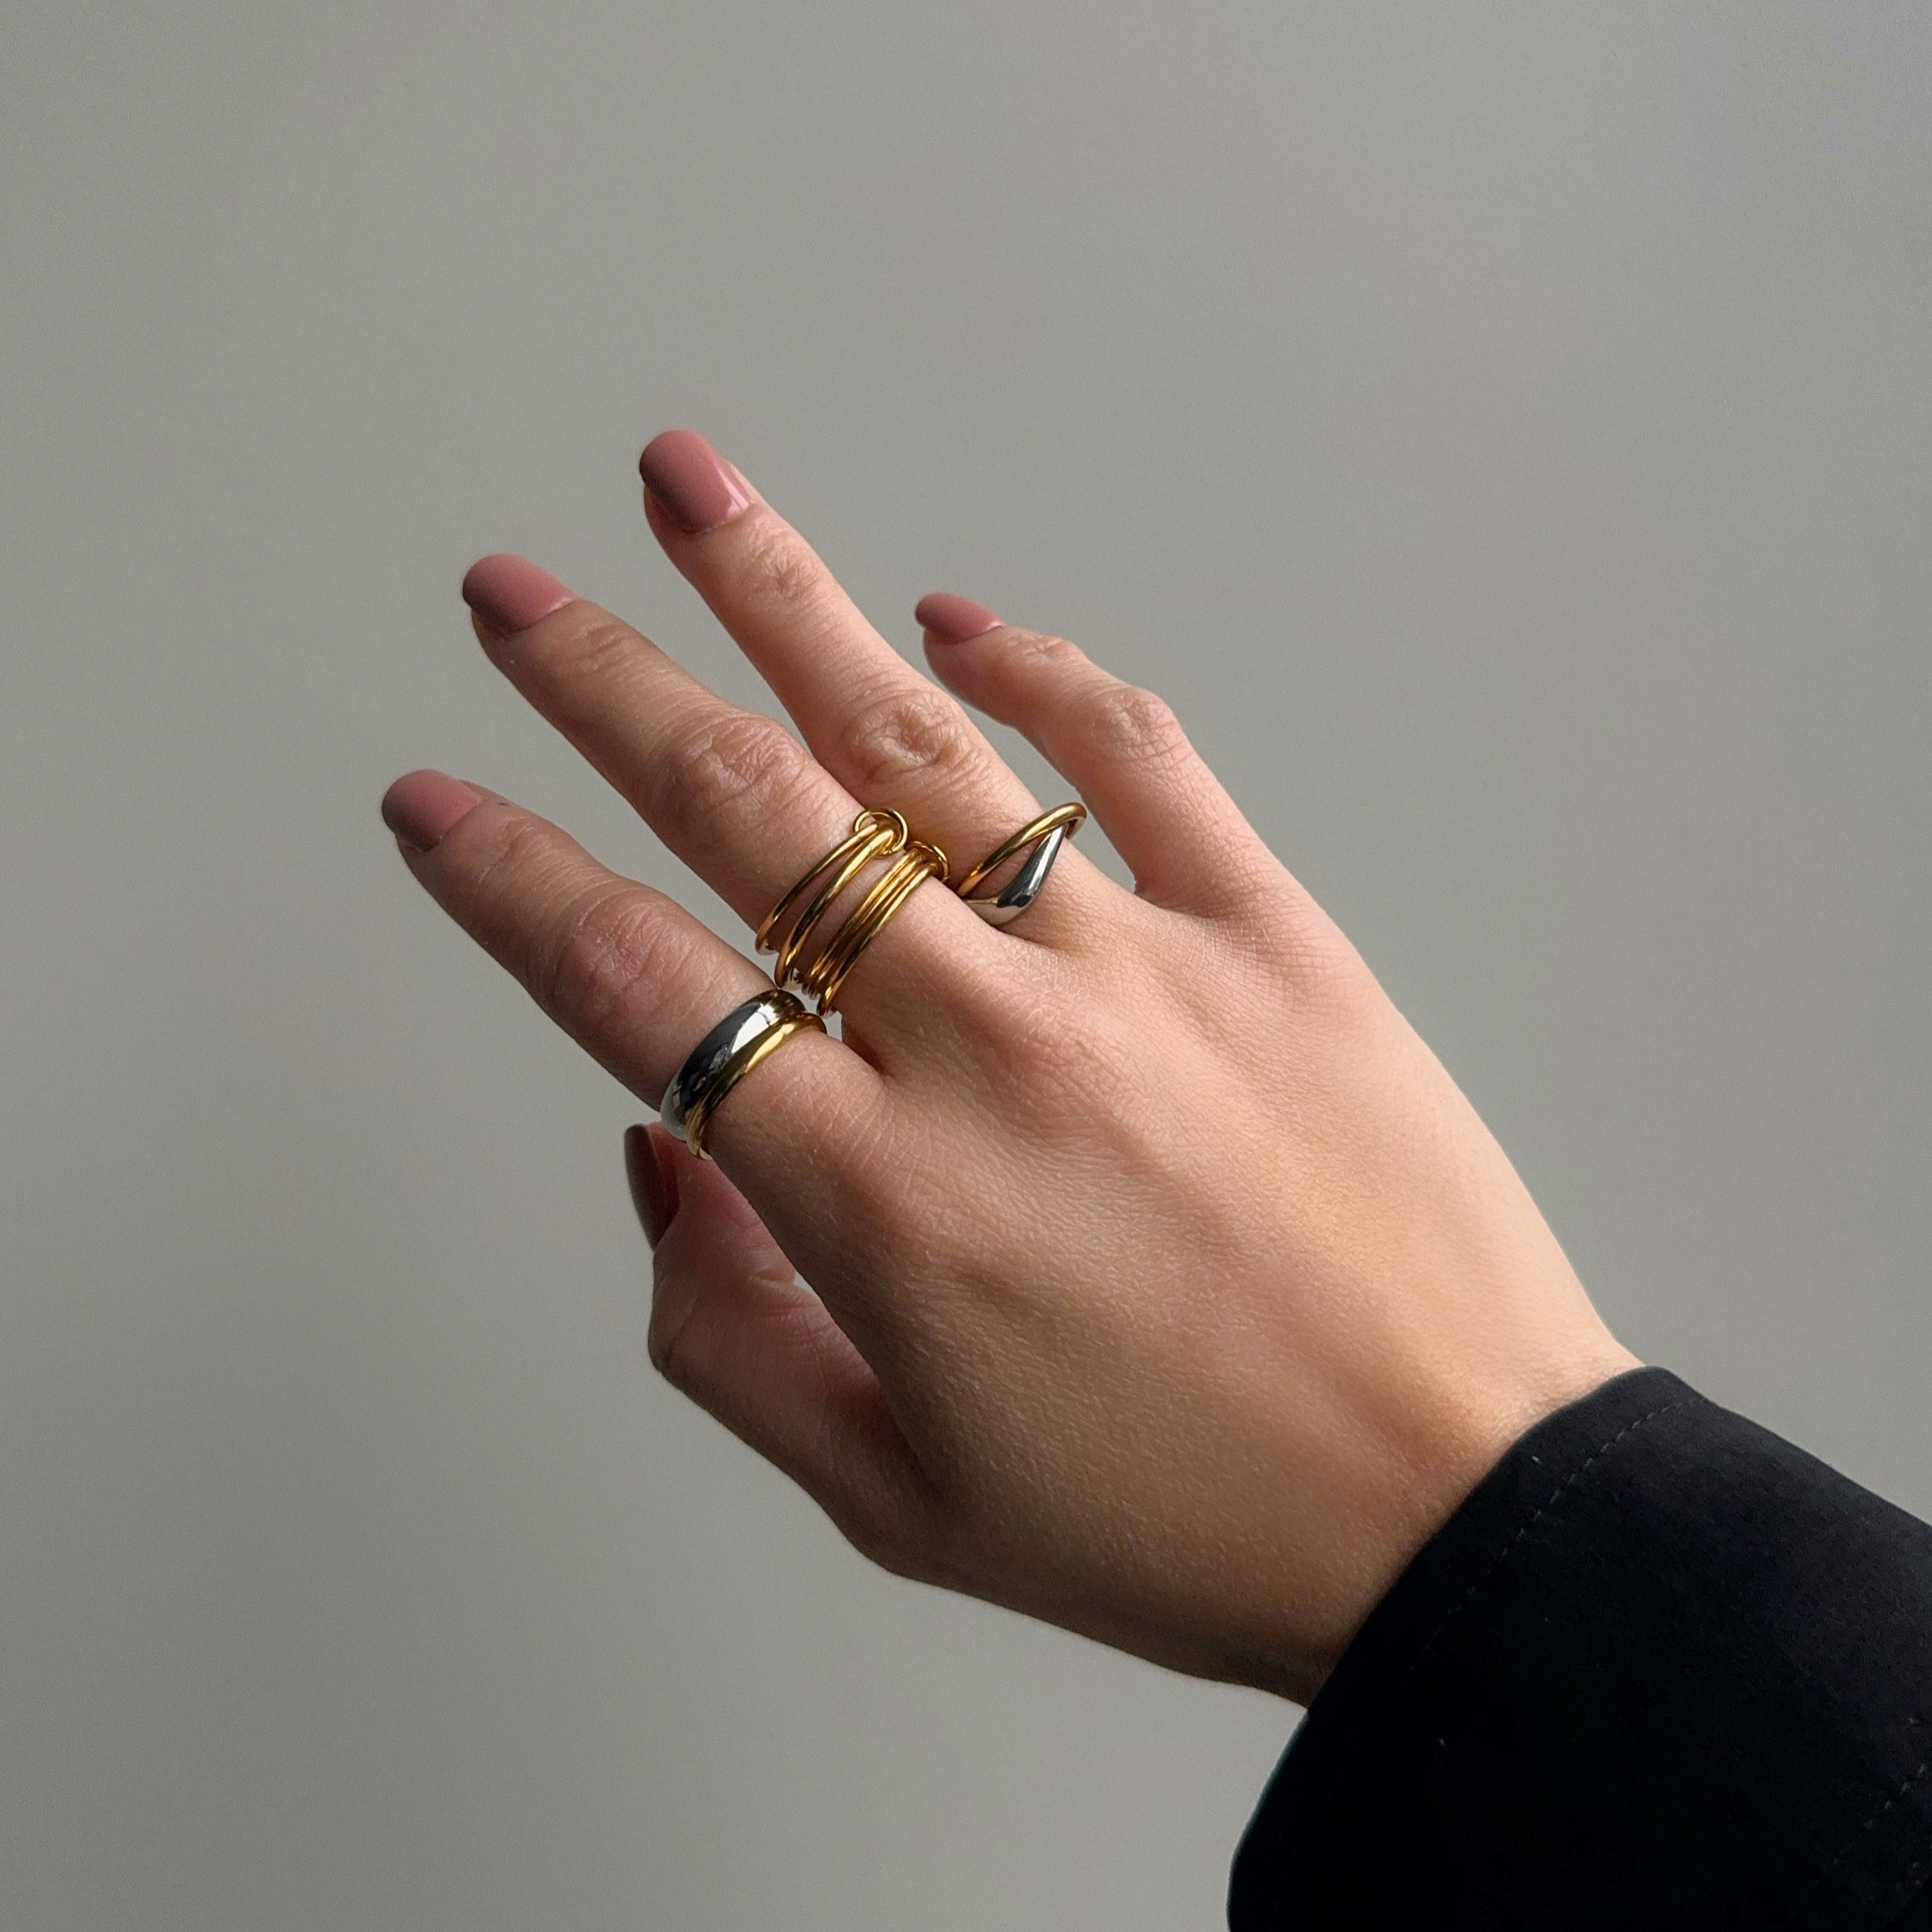 Meideya Jewelry Gold 5-link chain ring